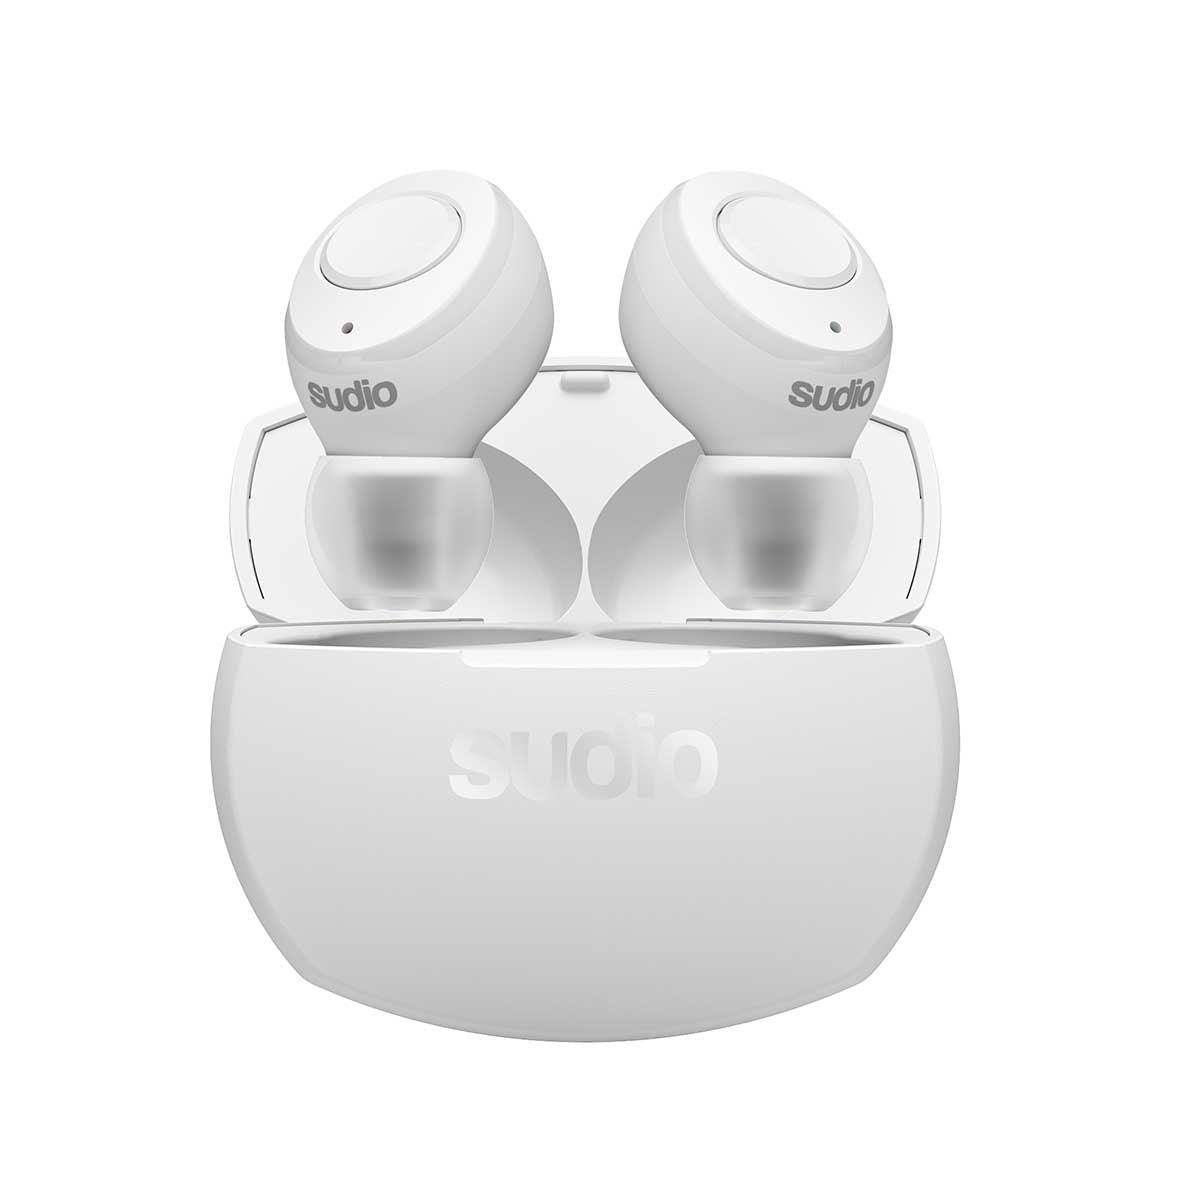 sudio wireless earphones price